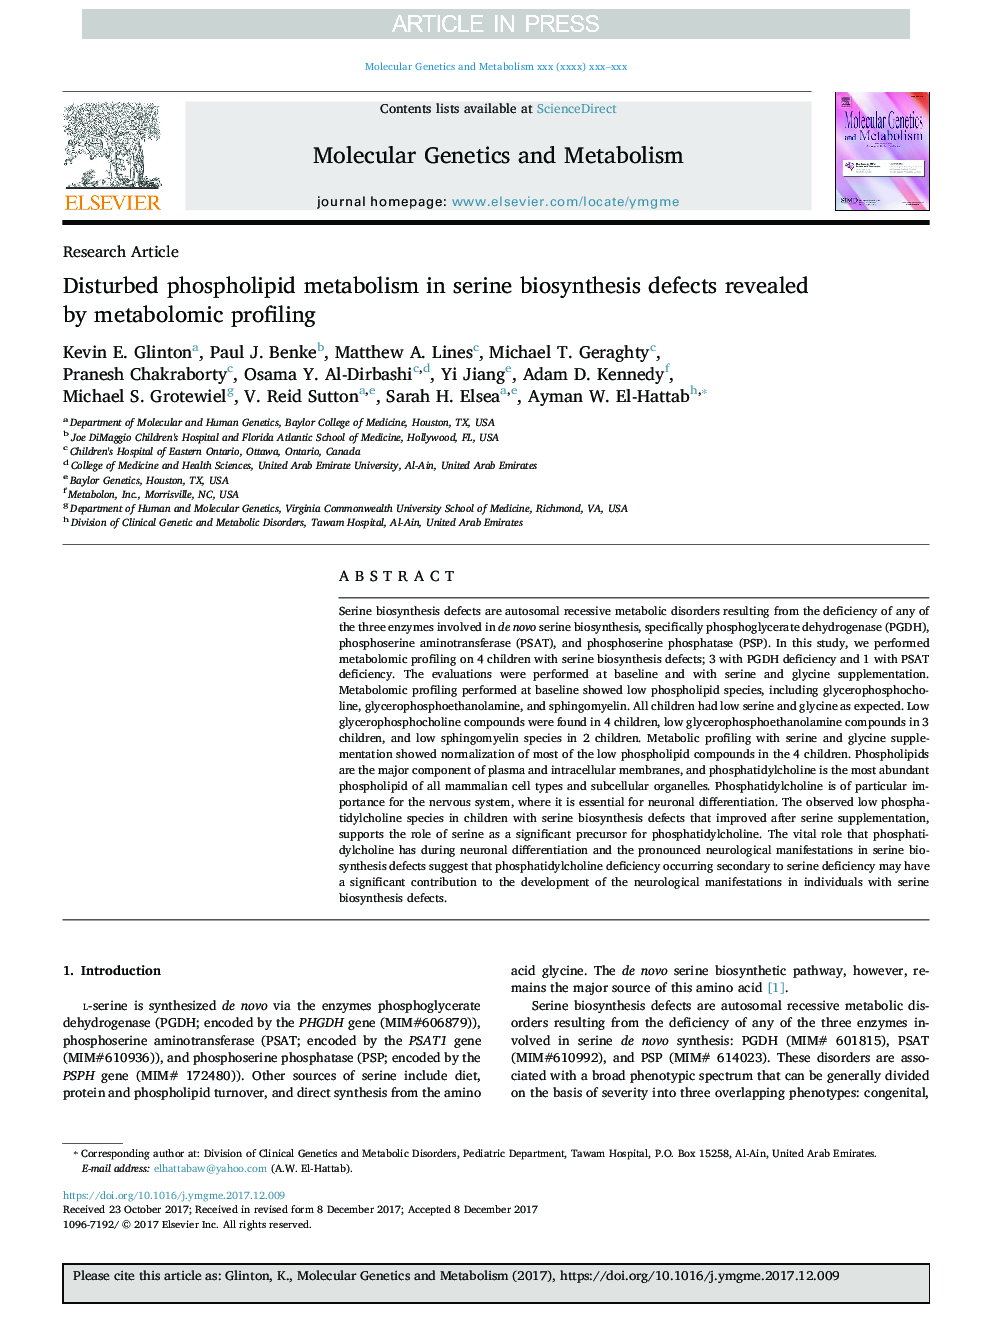 Disturbed phospholipid metabolism in serine biosynthesis defects revealed by metabolomic profiling